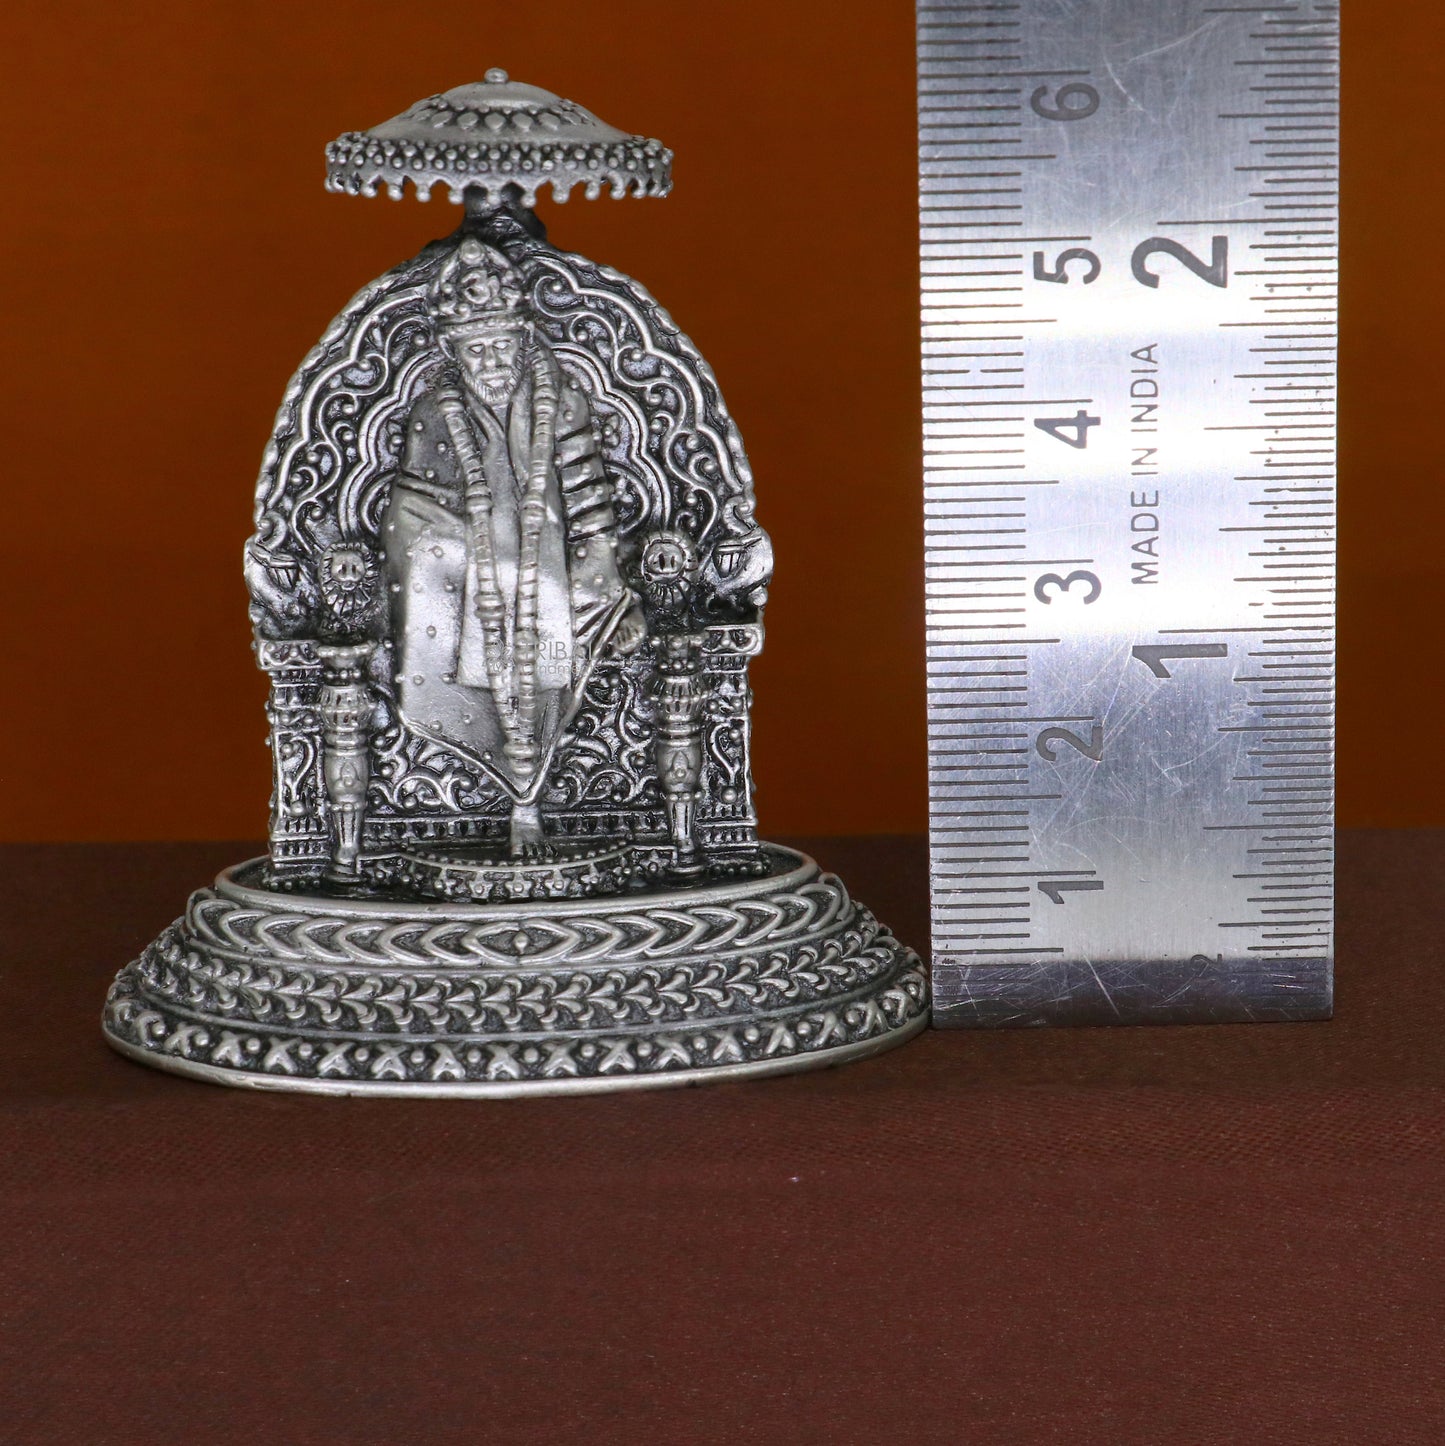 925 sterling silver handmade Divine Hindu idol deity SIRDI Sai Baba statue divine Statue Sculpture figurine puja article gifting art702 - TRIBAL ORNAMENTS